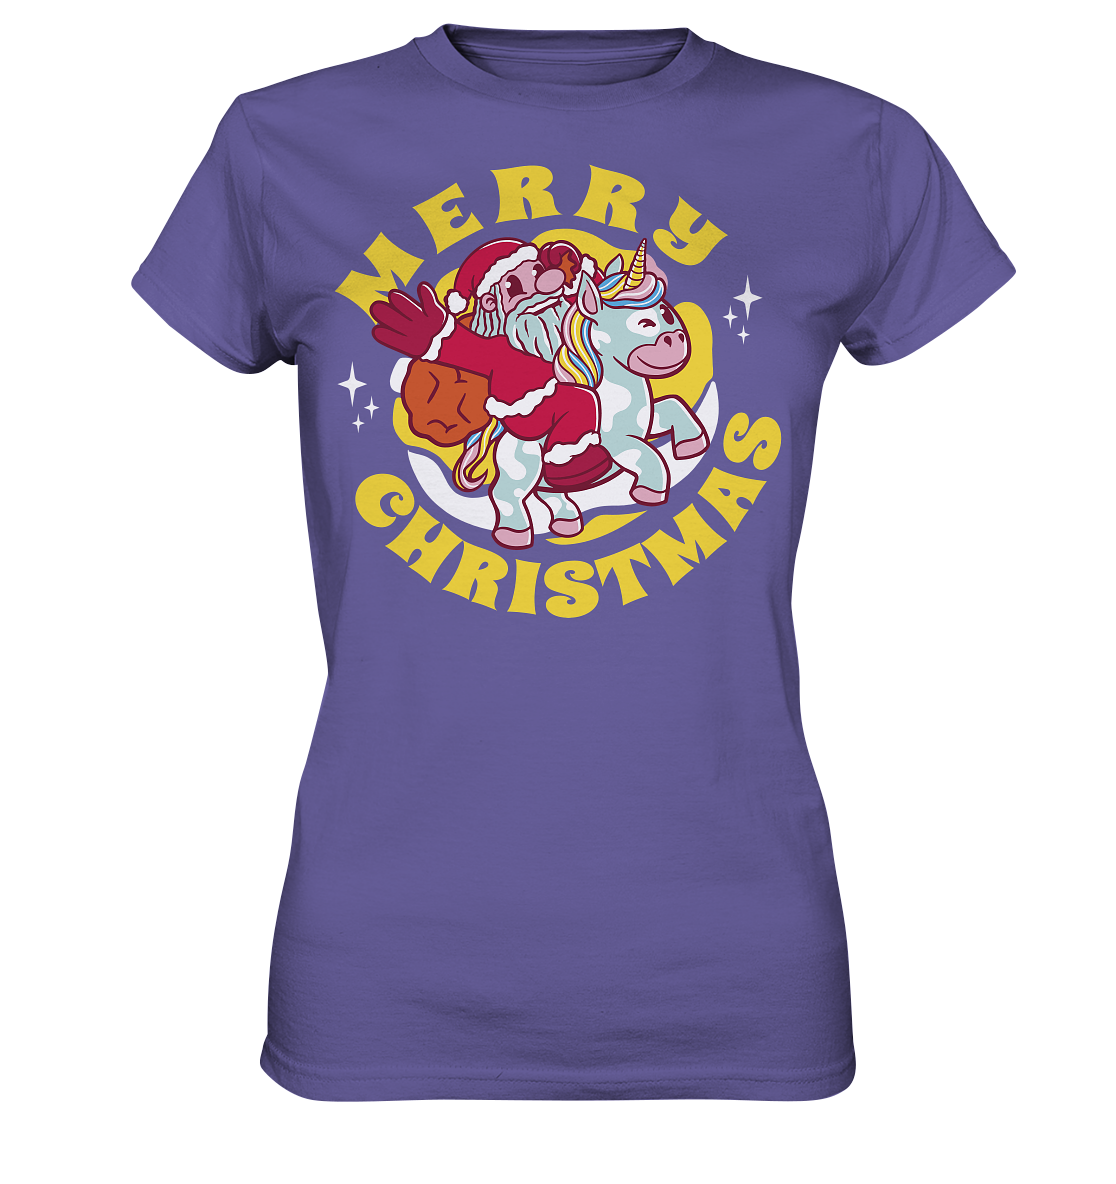 Riding Santa Claus, Merry Christmas, Merry Christmas - Ladies Premium Shirt